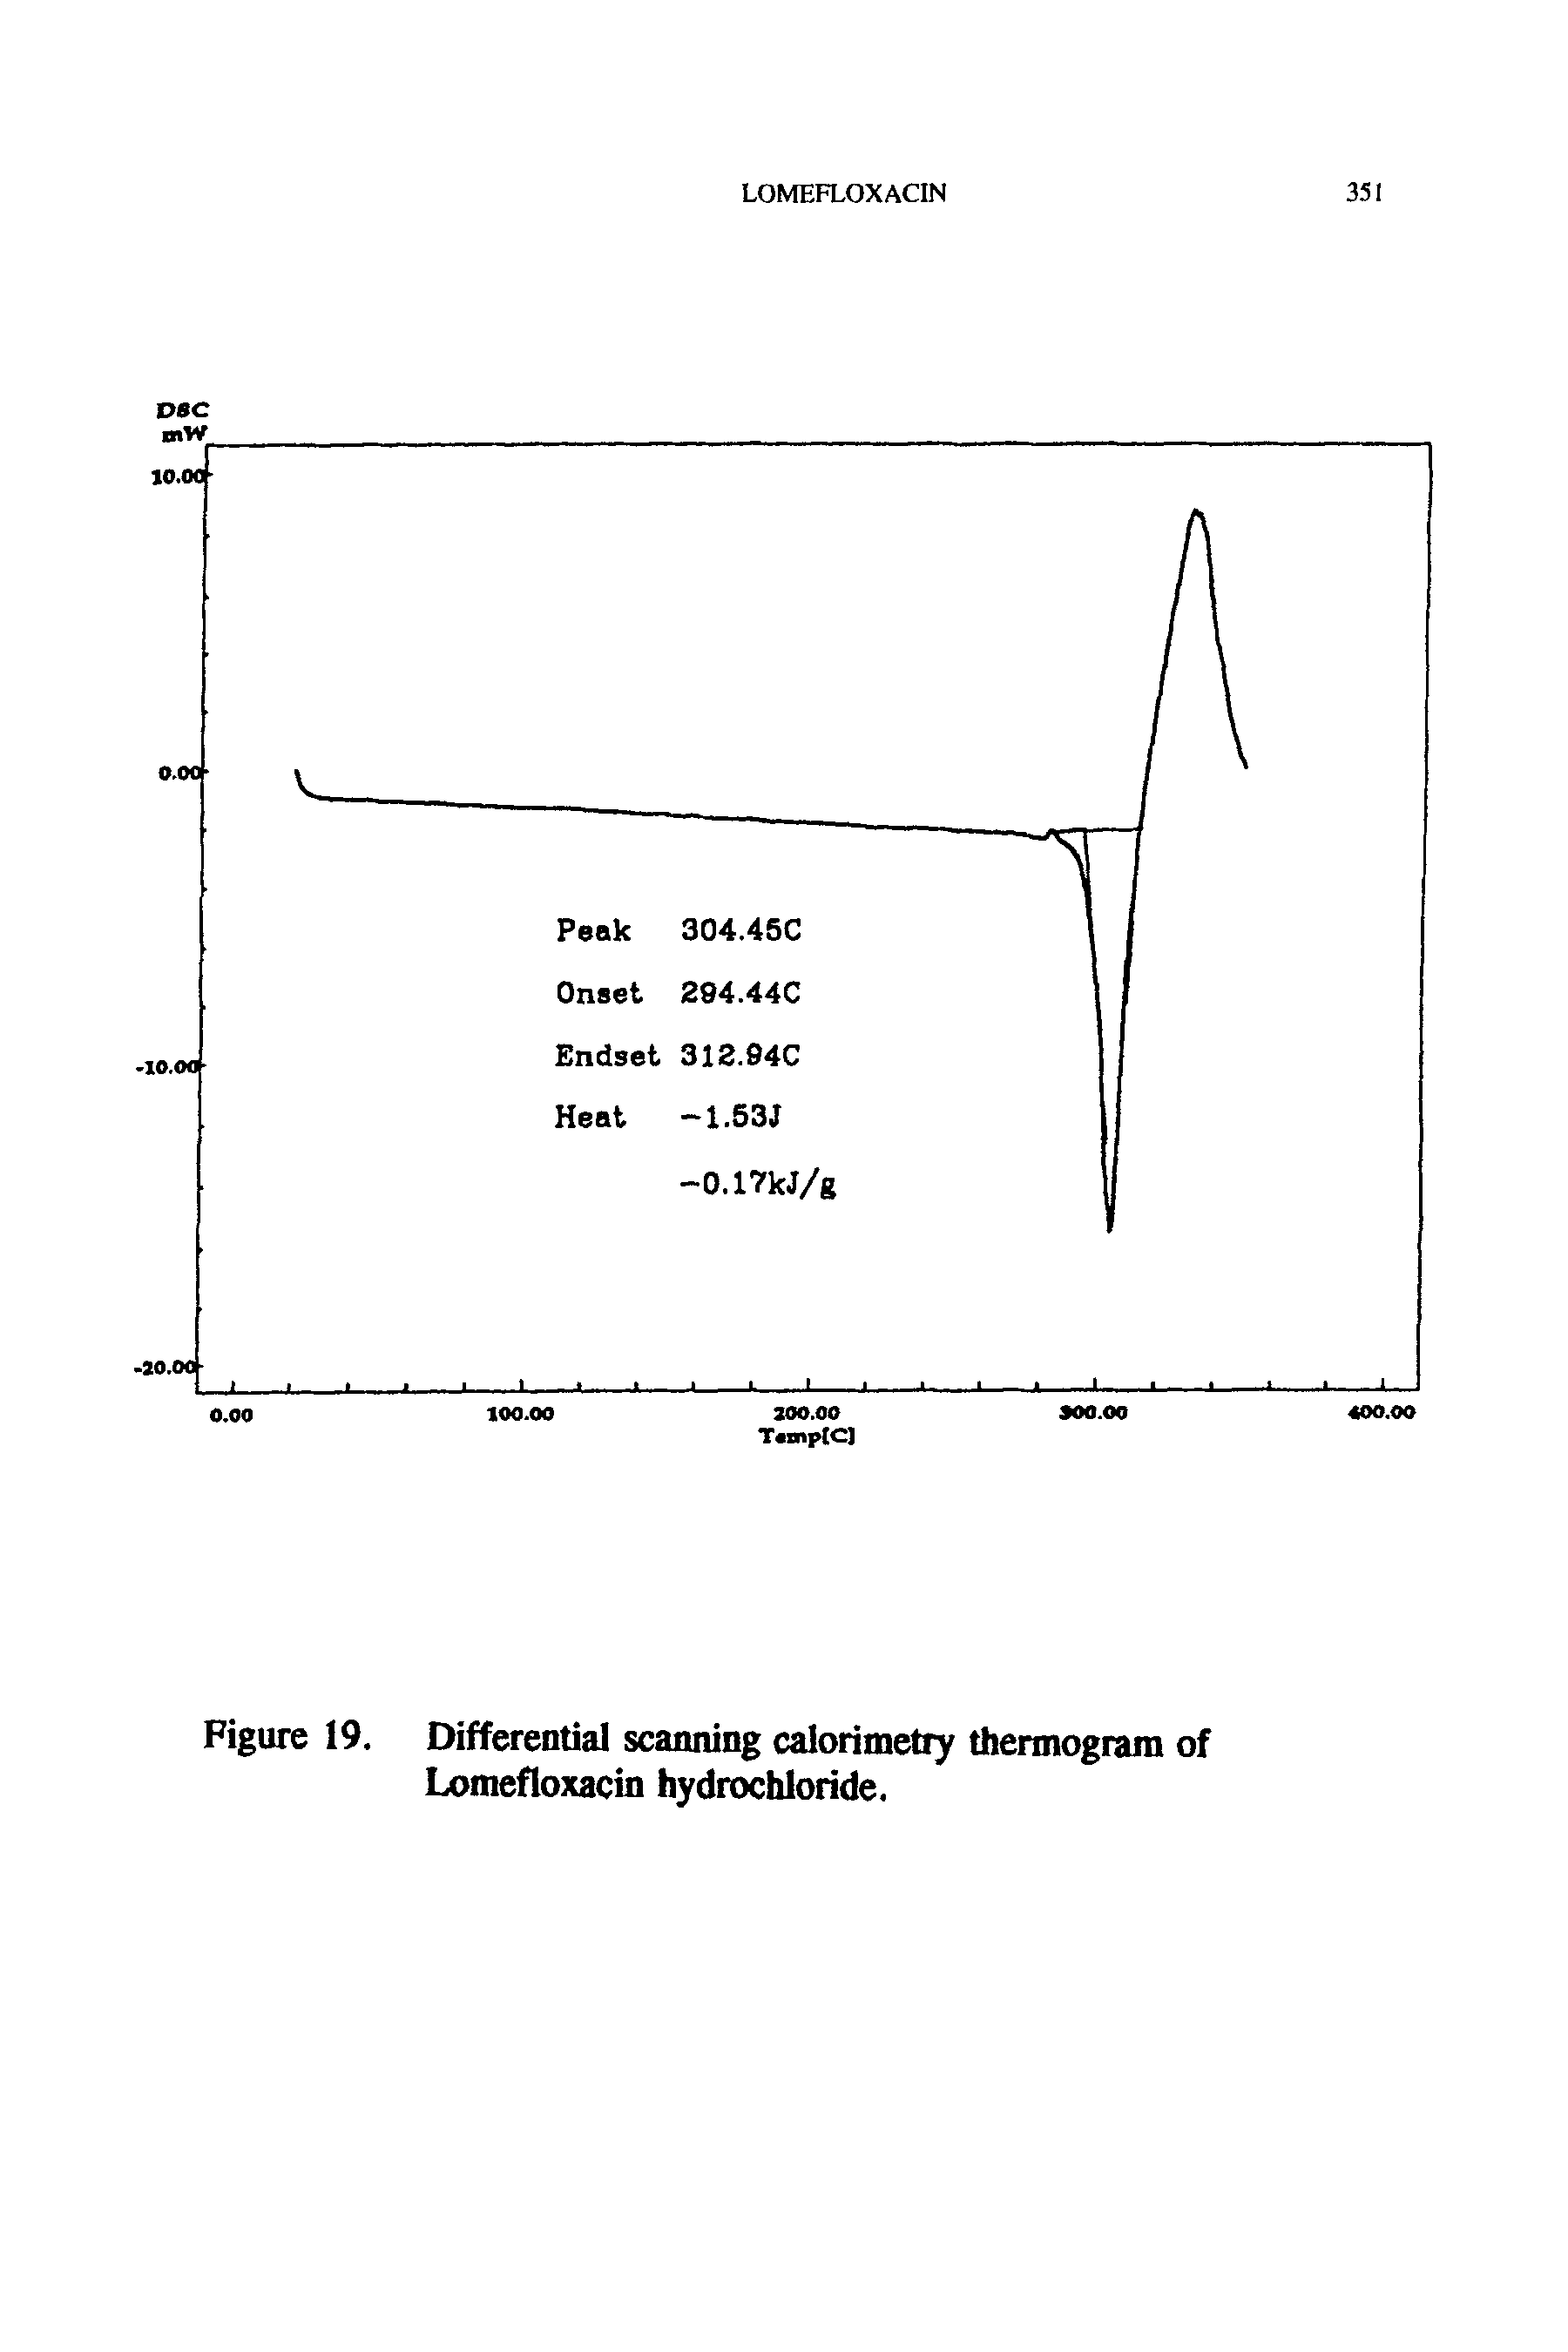 Figure 19. Differential scanning calorimetry thermogram of Lomefloxacin hydrochloride.